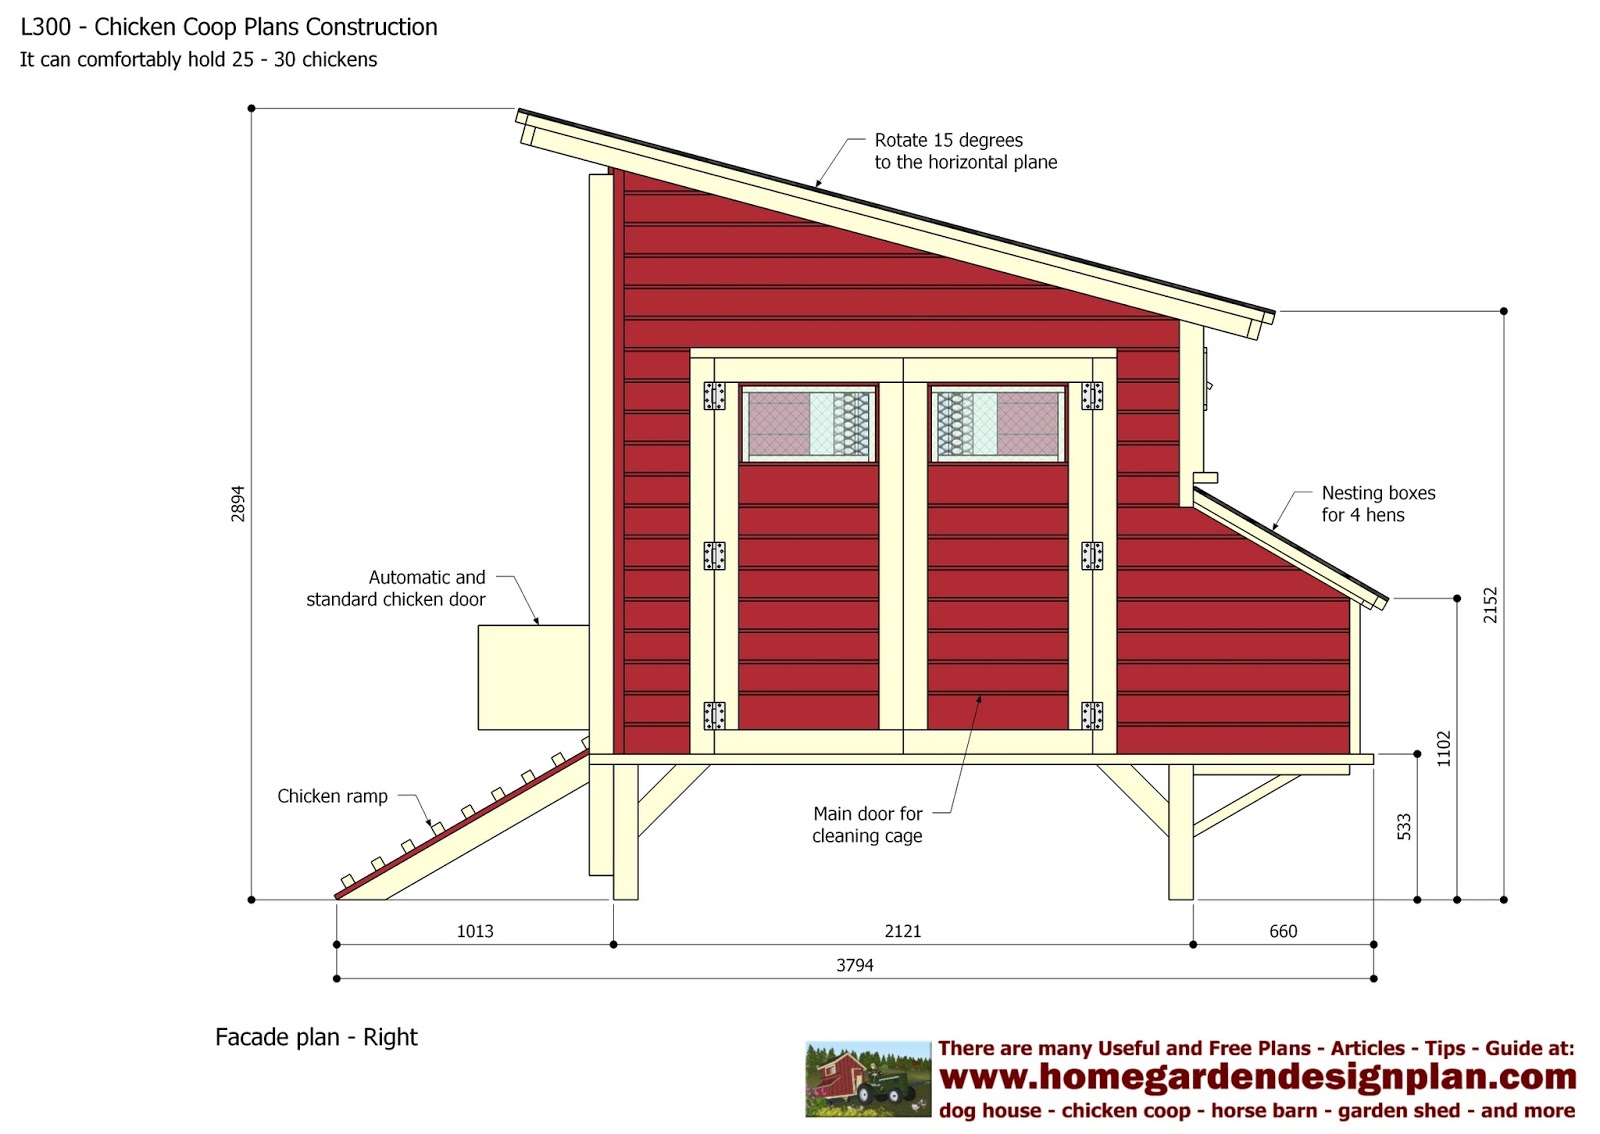 home garden plans: L300 - 0.3.2+ +L300+ +Chicken+Coop+Plans+Construction+ +Chicken+Coop+Design+ +How+To+BuilD+A+Chicken+Coop